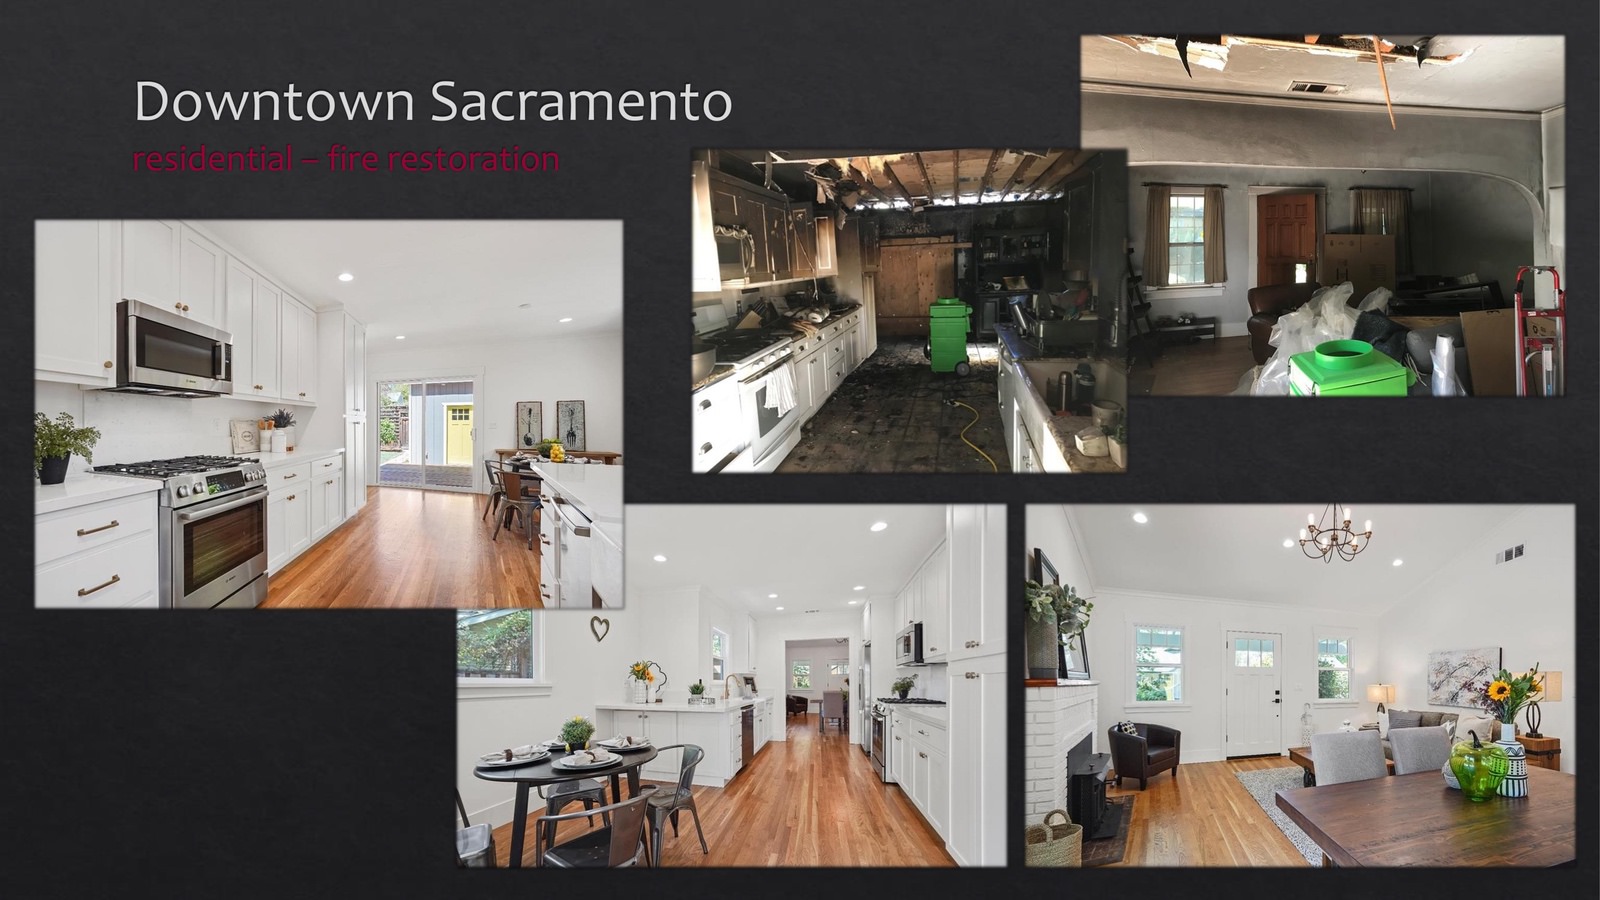 Downtown Sacramento Residential fire restoration - kitchen and livingroom - lightbox